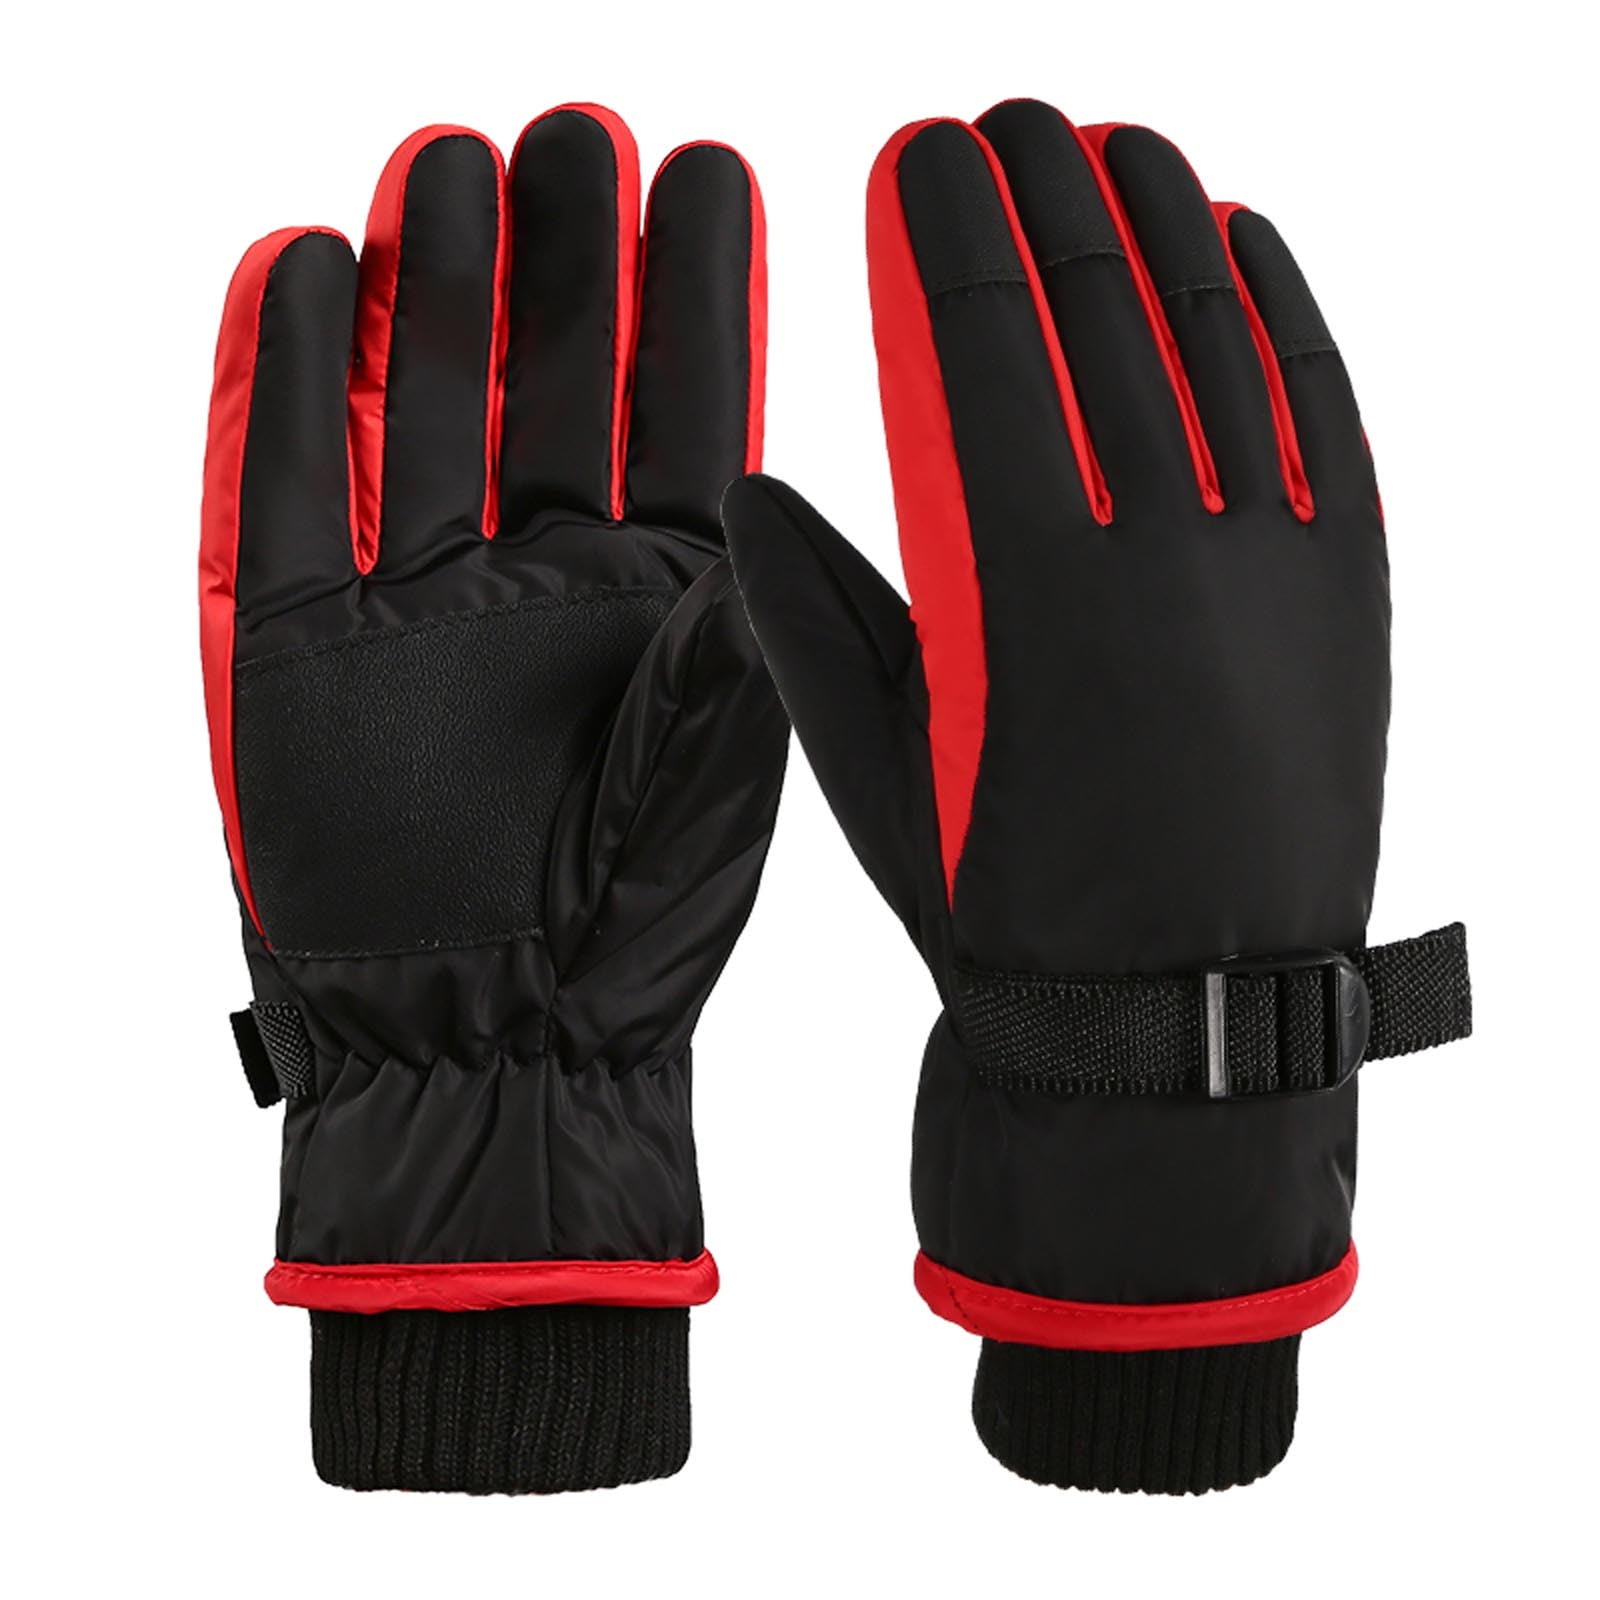 Kids Winter Gloves Outdoor Snow & Ski Waterproof Gloves for Boys Toddler Girls